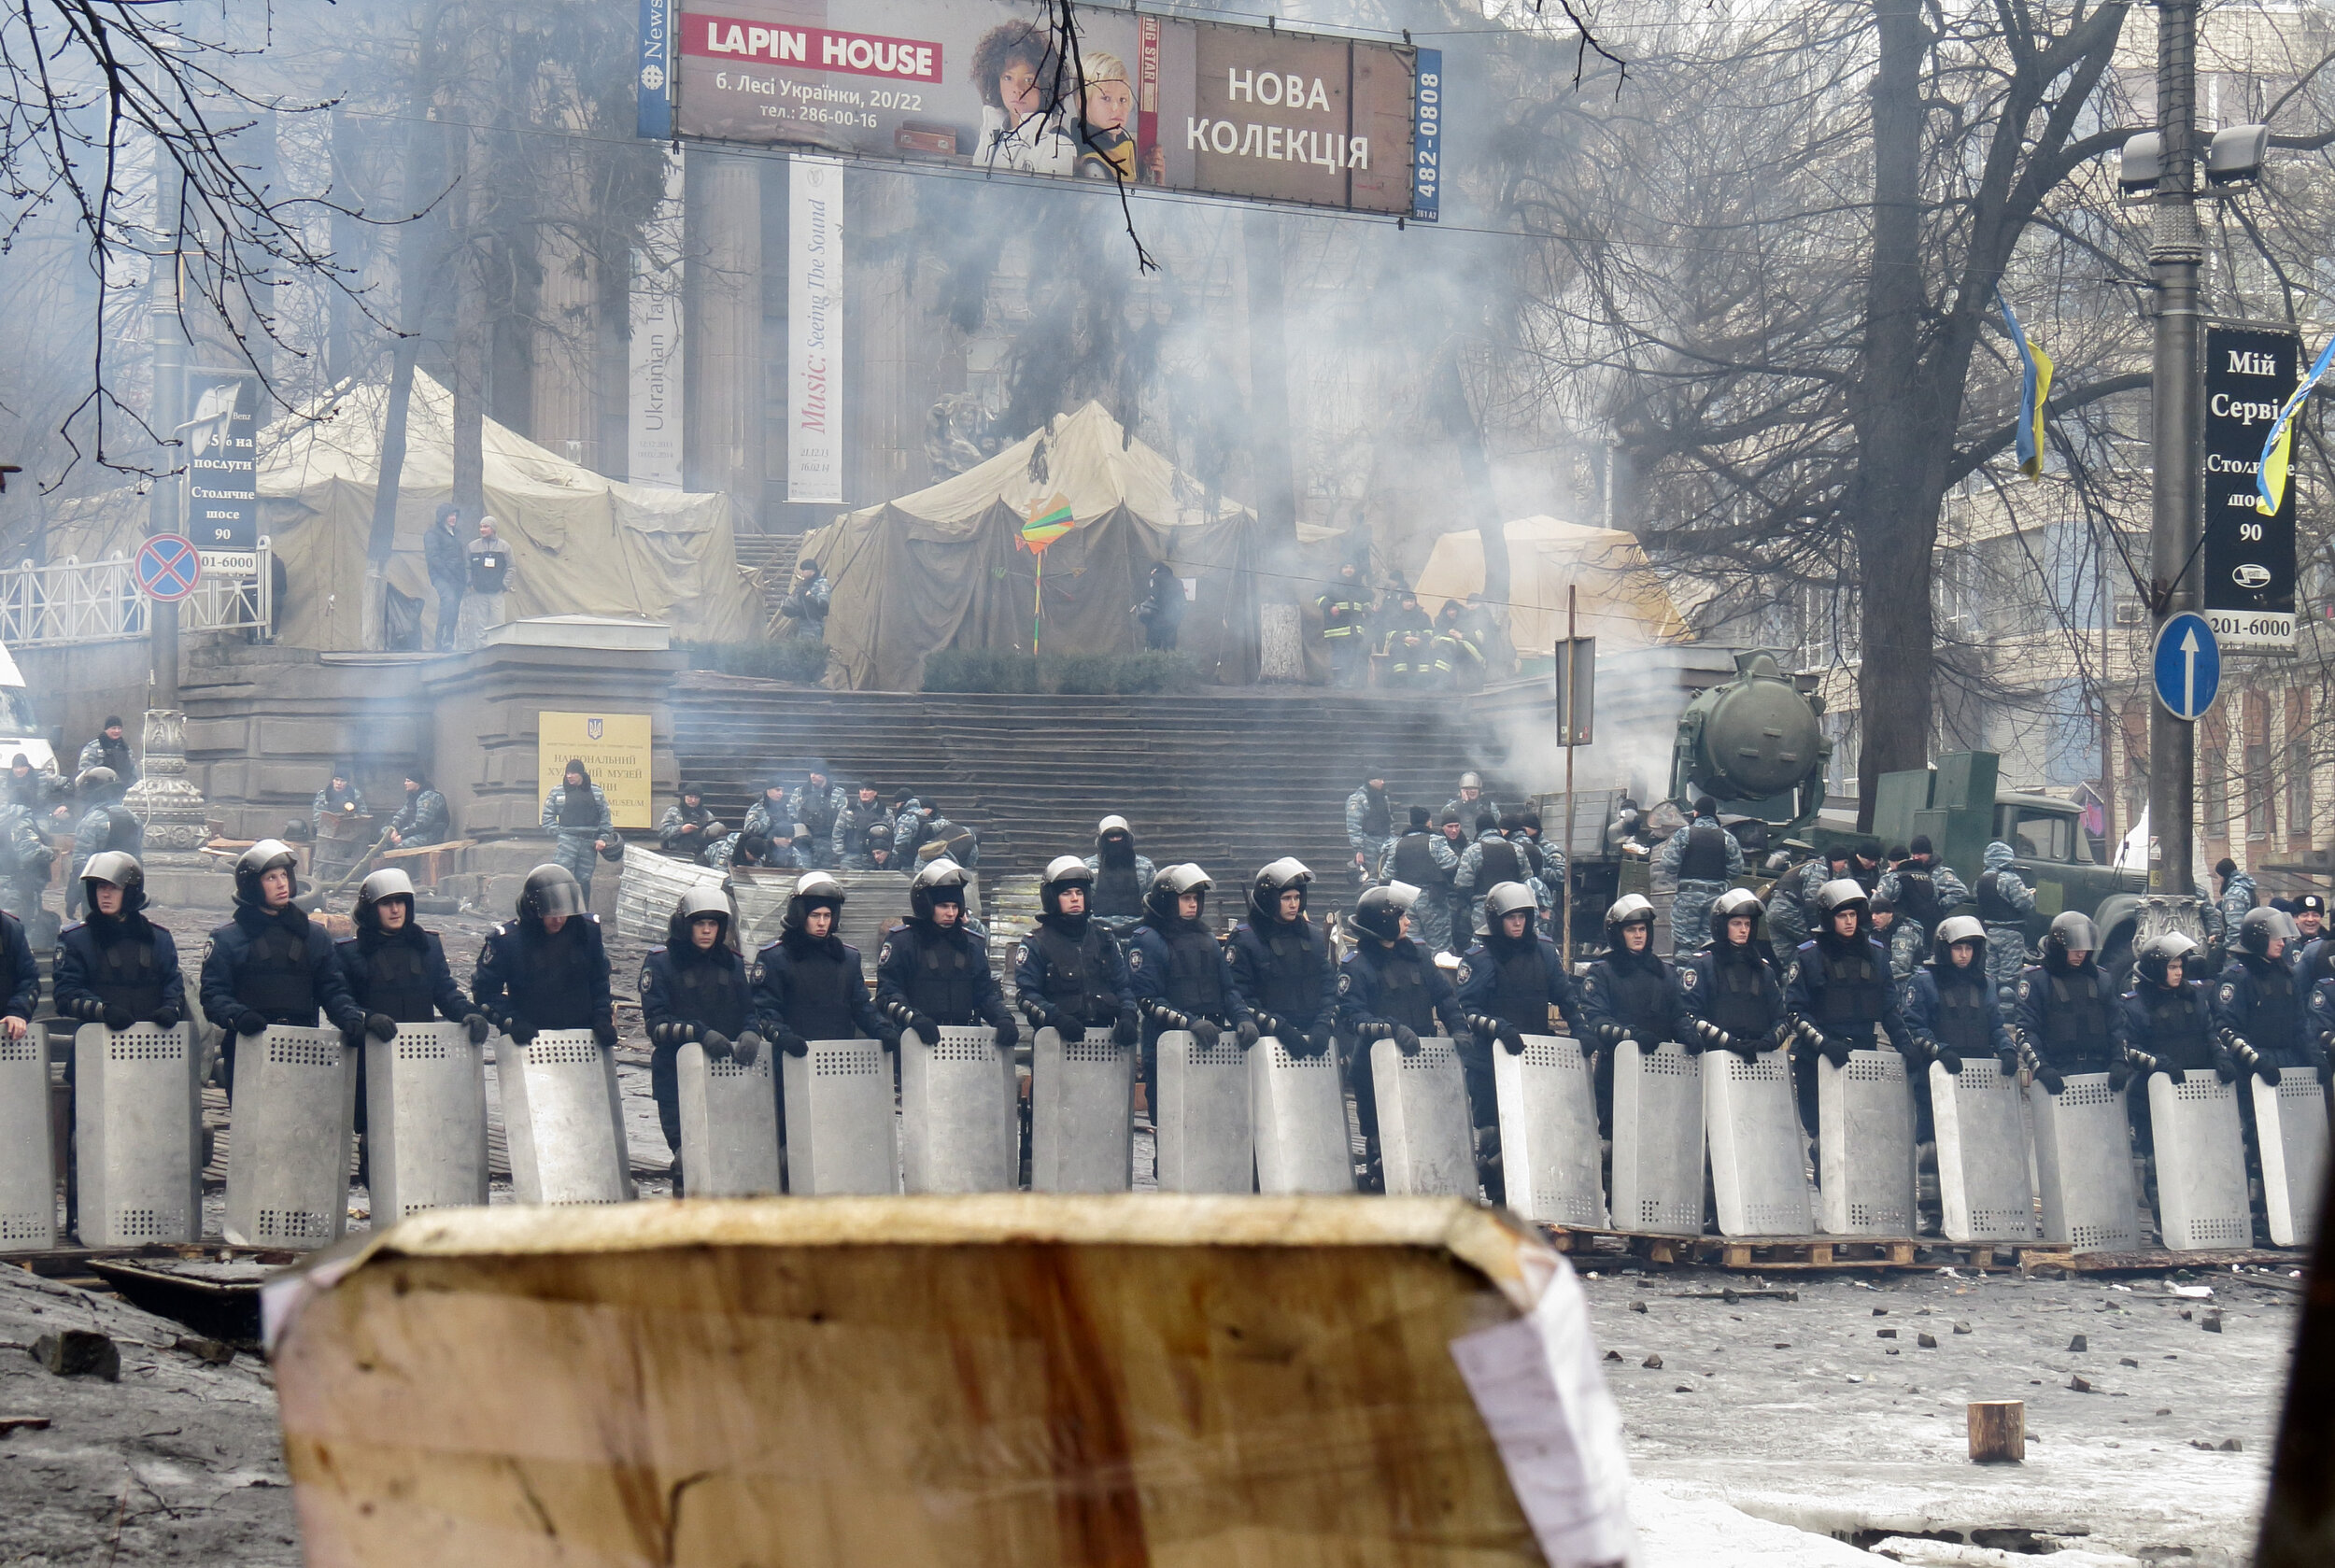 Police during 2014 Revolution in Ukraine